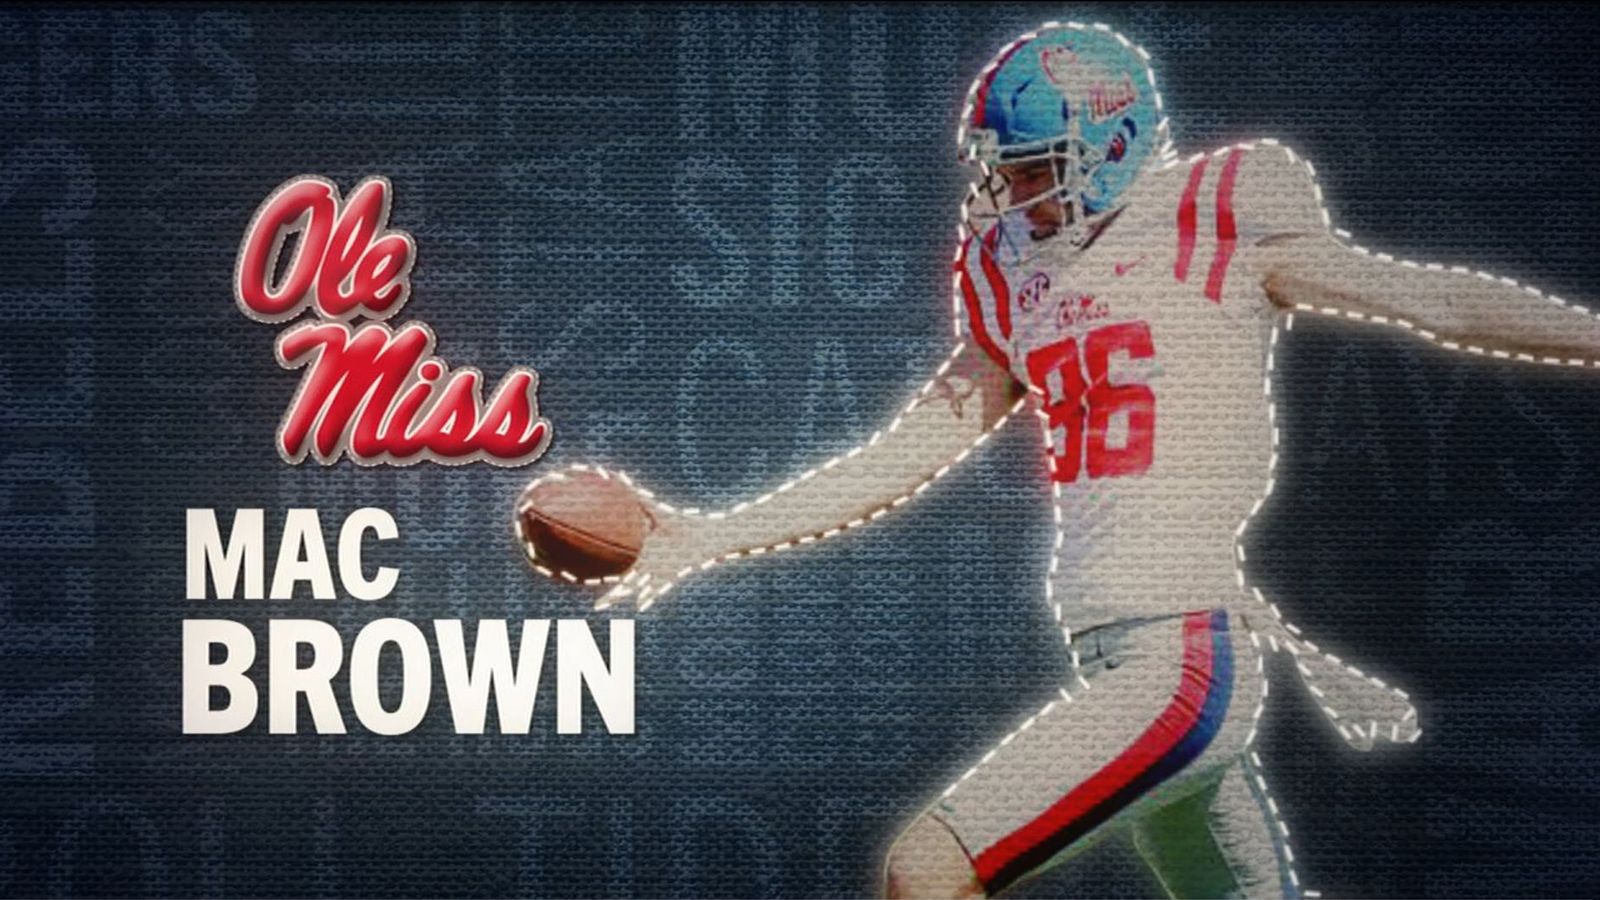 I am the SEC: Ole Miss' Mac Brown